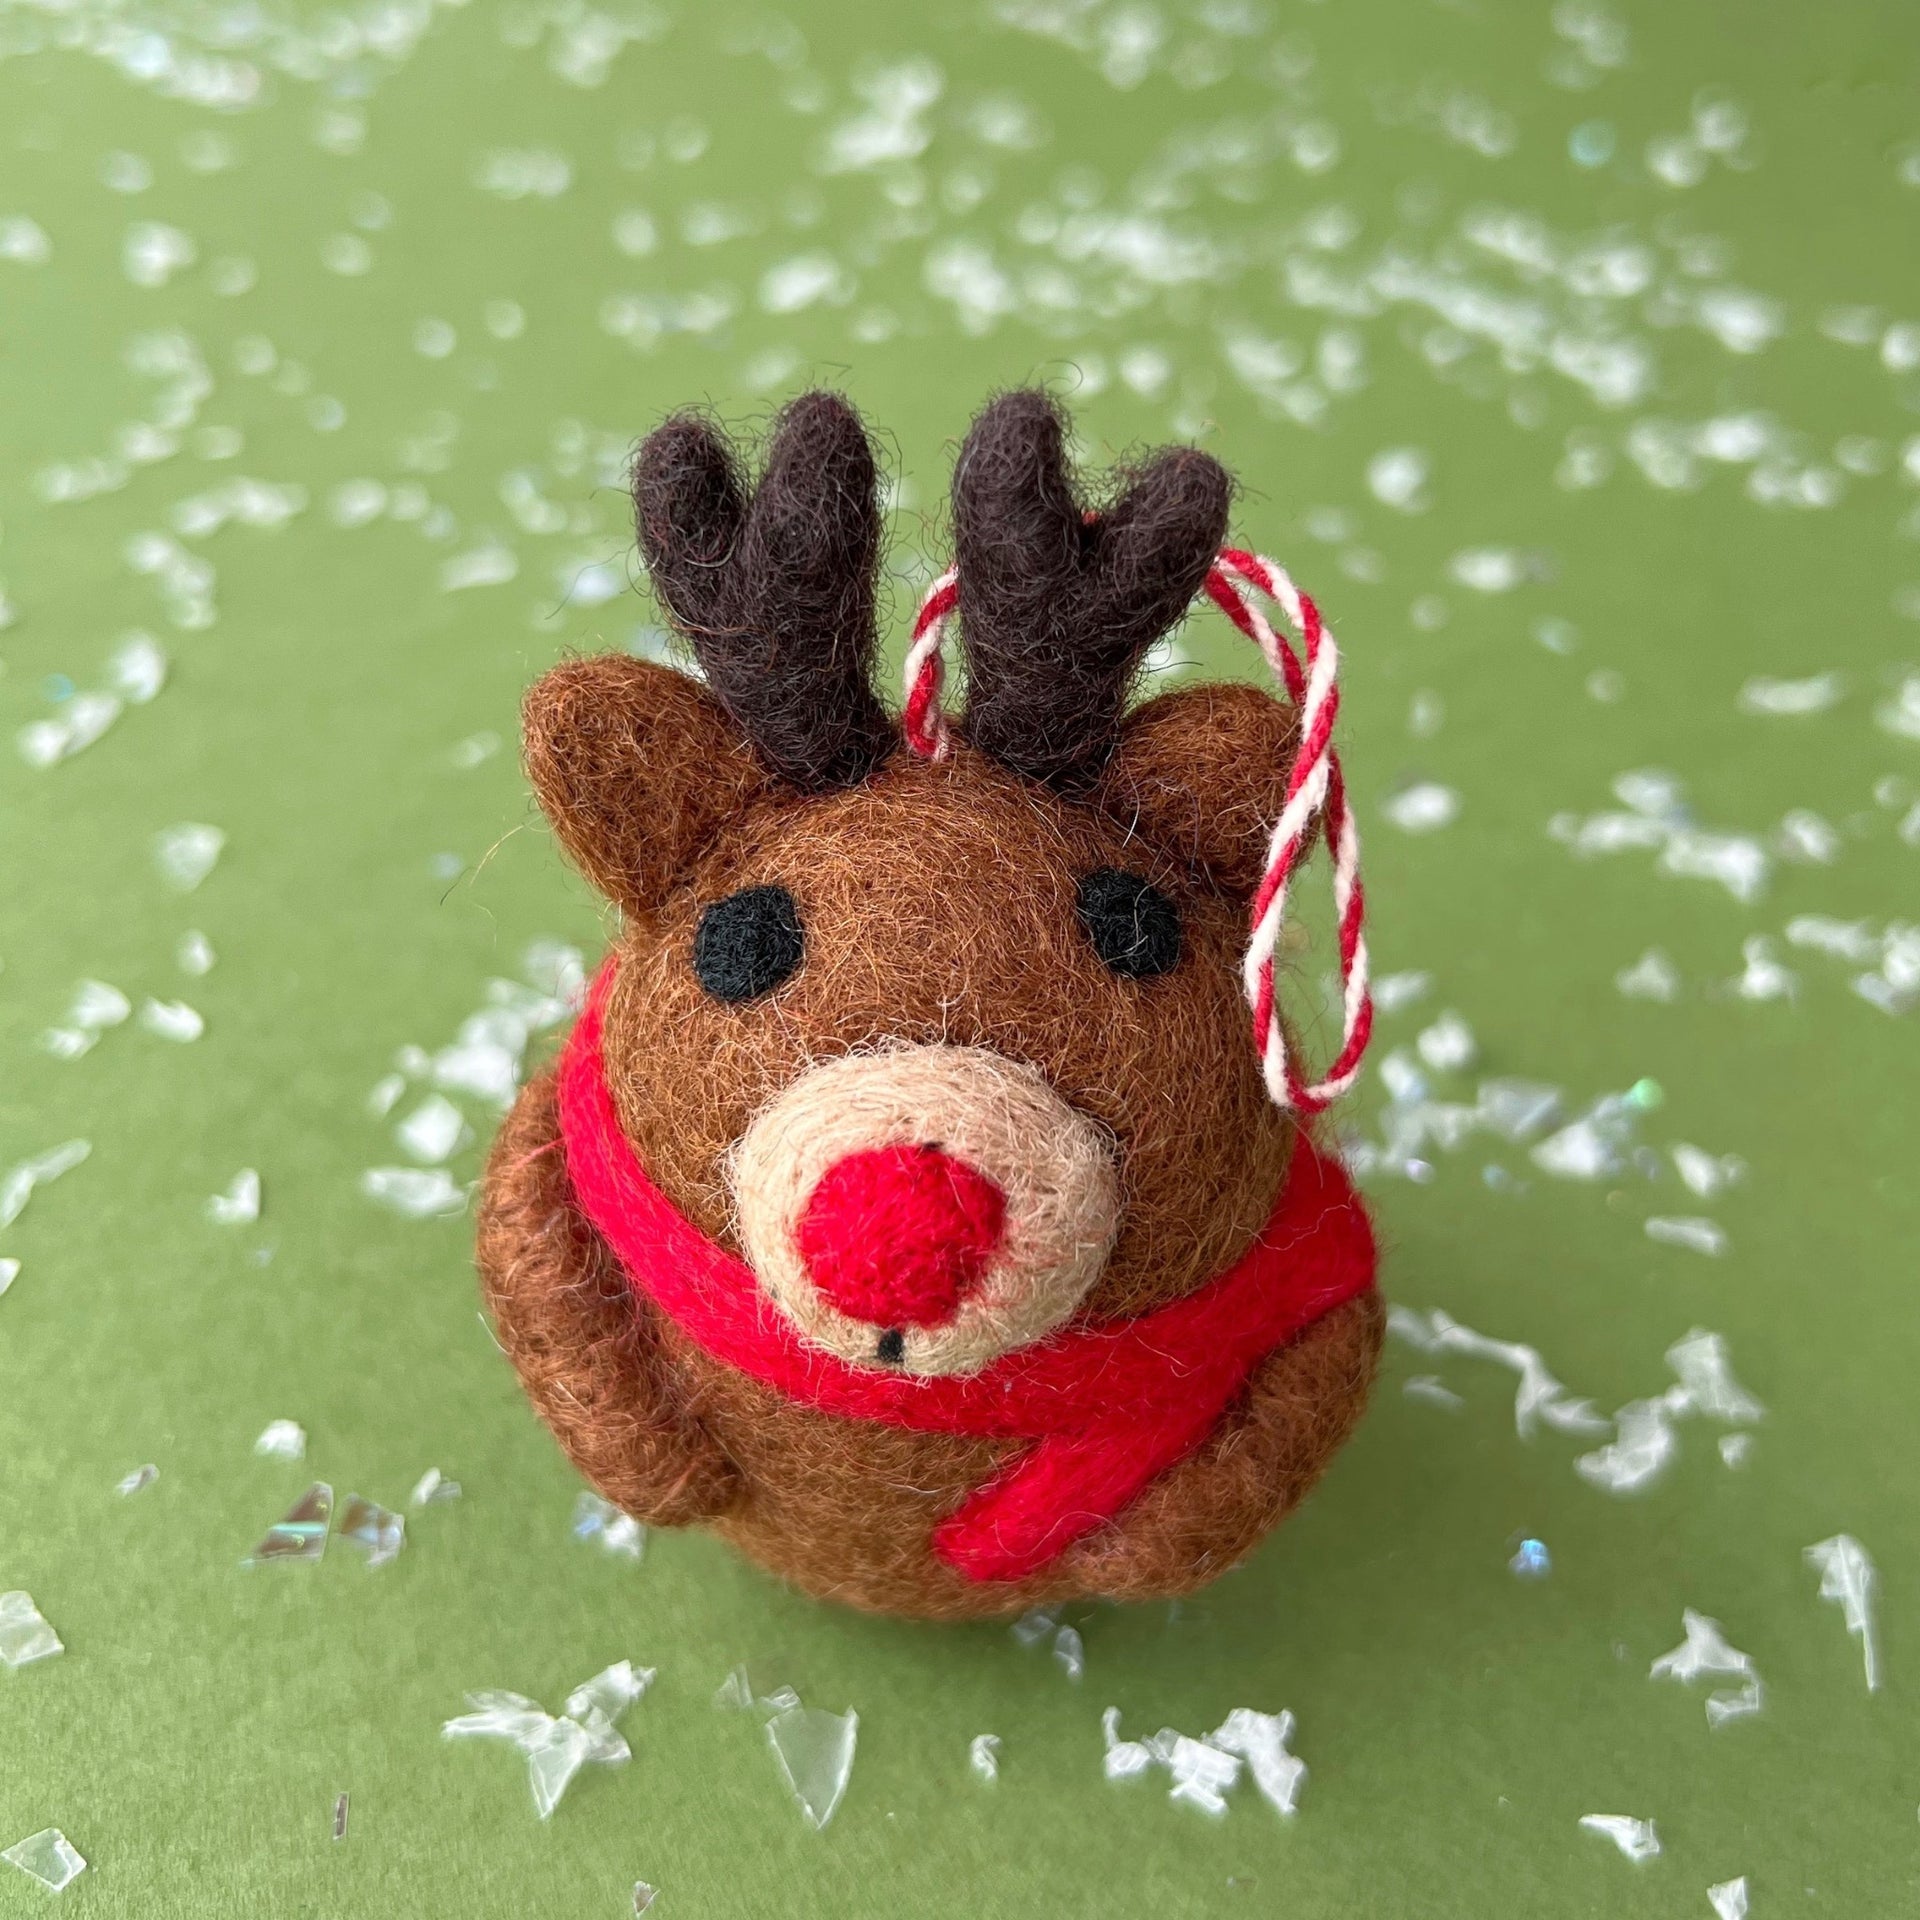 Tufted wool chubby reindeer Christmas ornament handmade in Nepal fair trade.